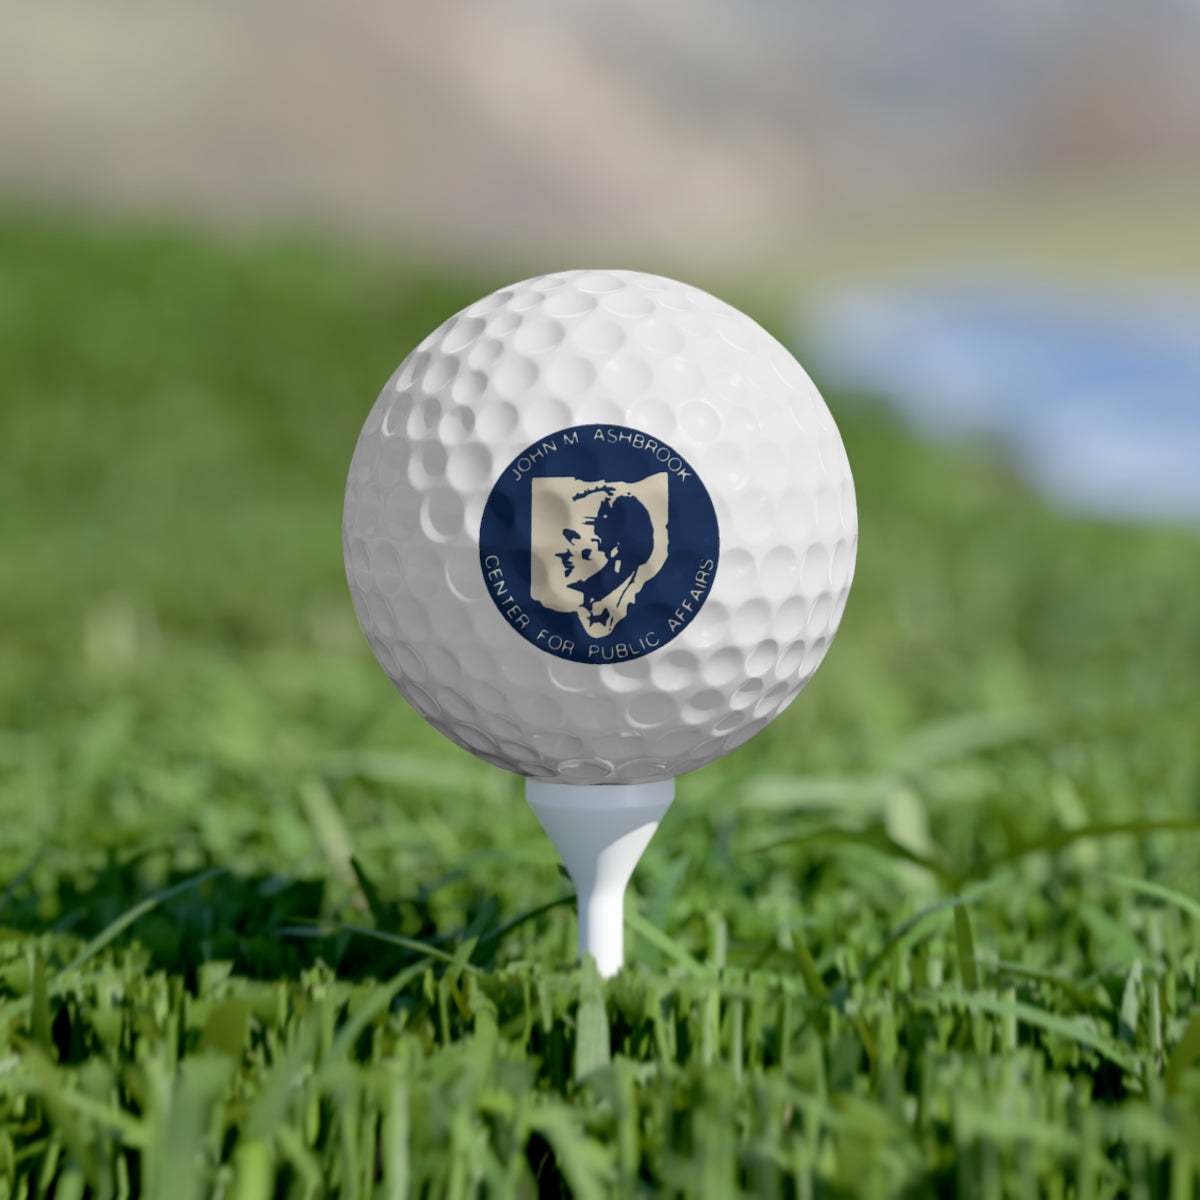 Golf Balls, 6pcs, with Vintage Logo